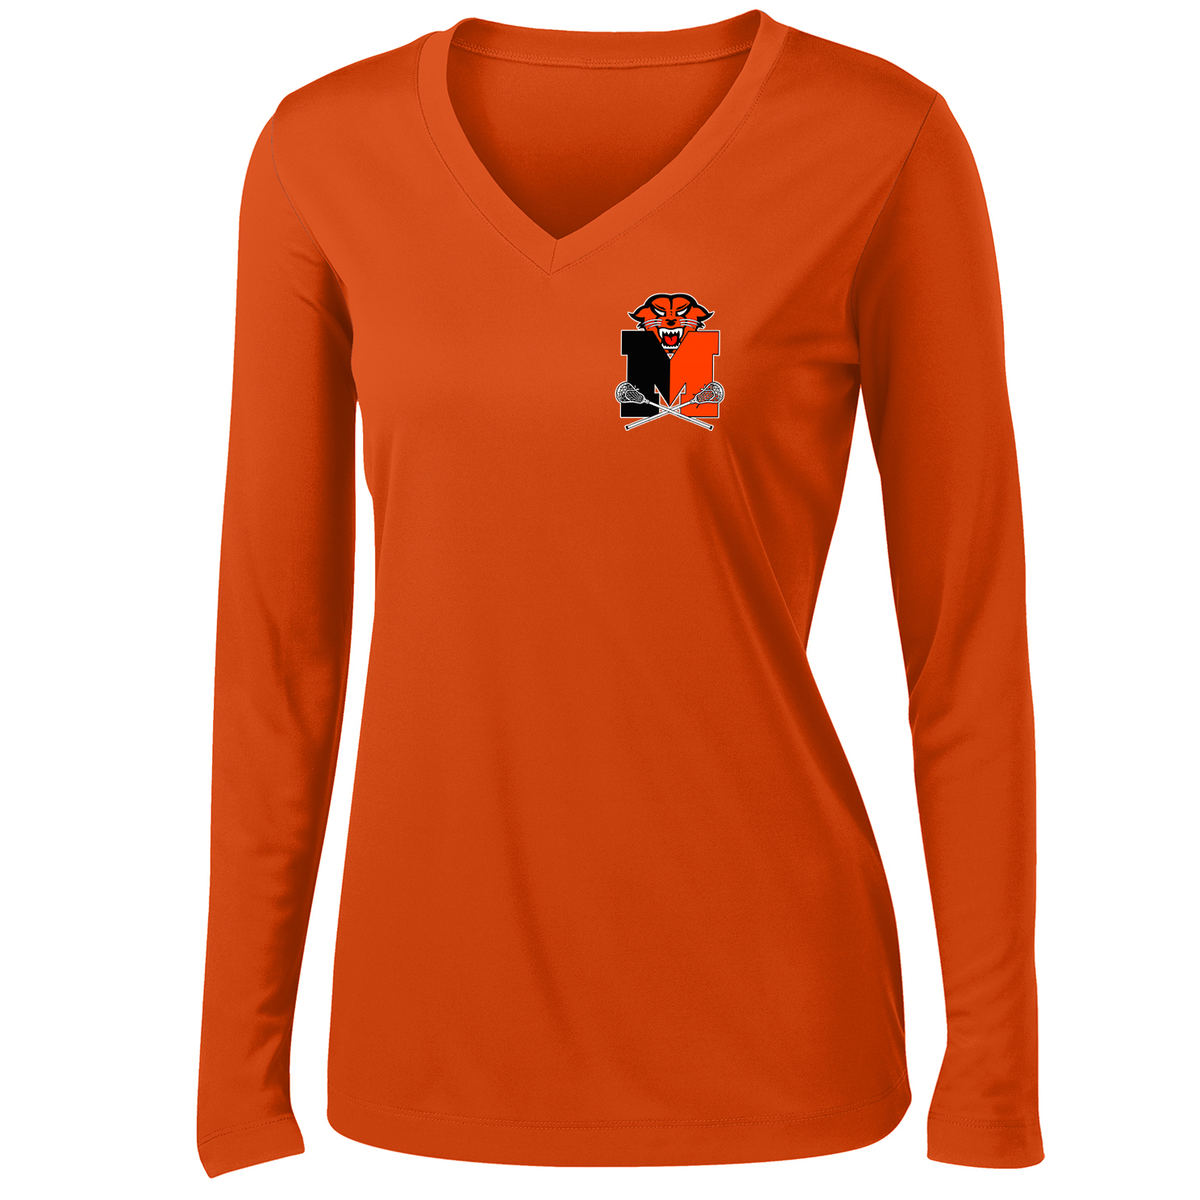 Monroe Lacrosse Women's Orange Long Sleeve Performance Shirt